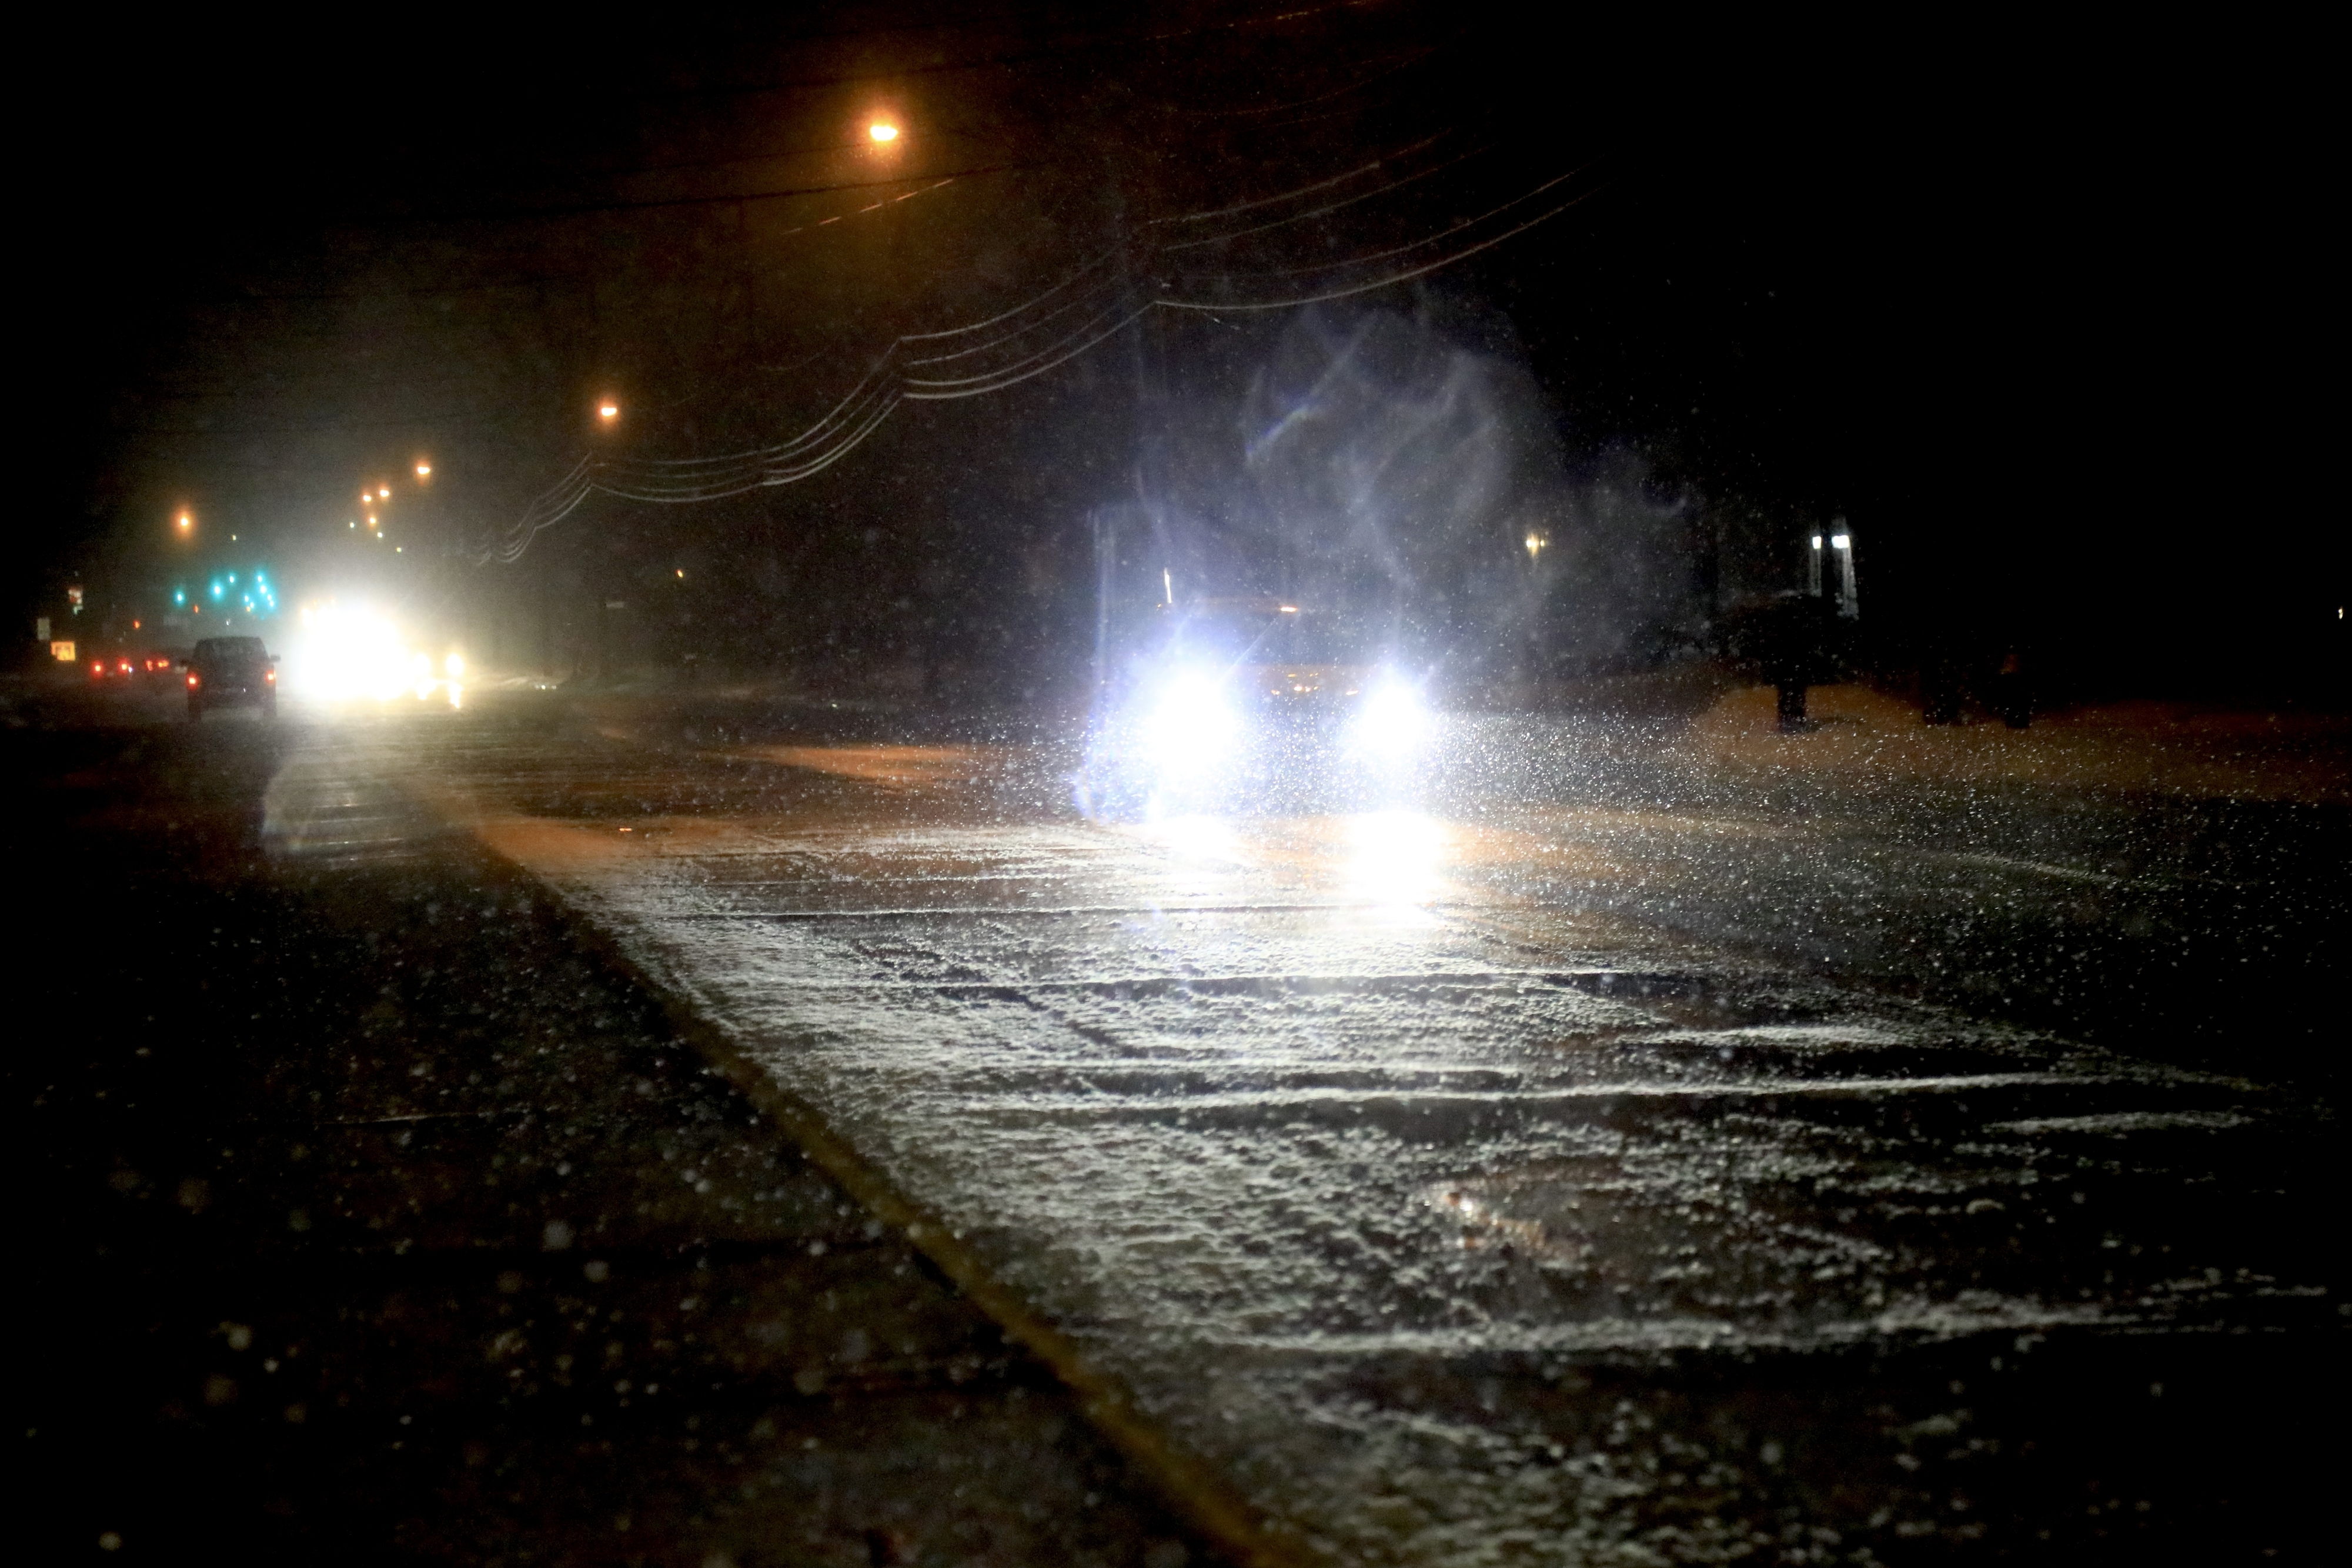 Car headlights illuminate a wet road at night with visible rain